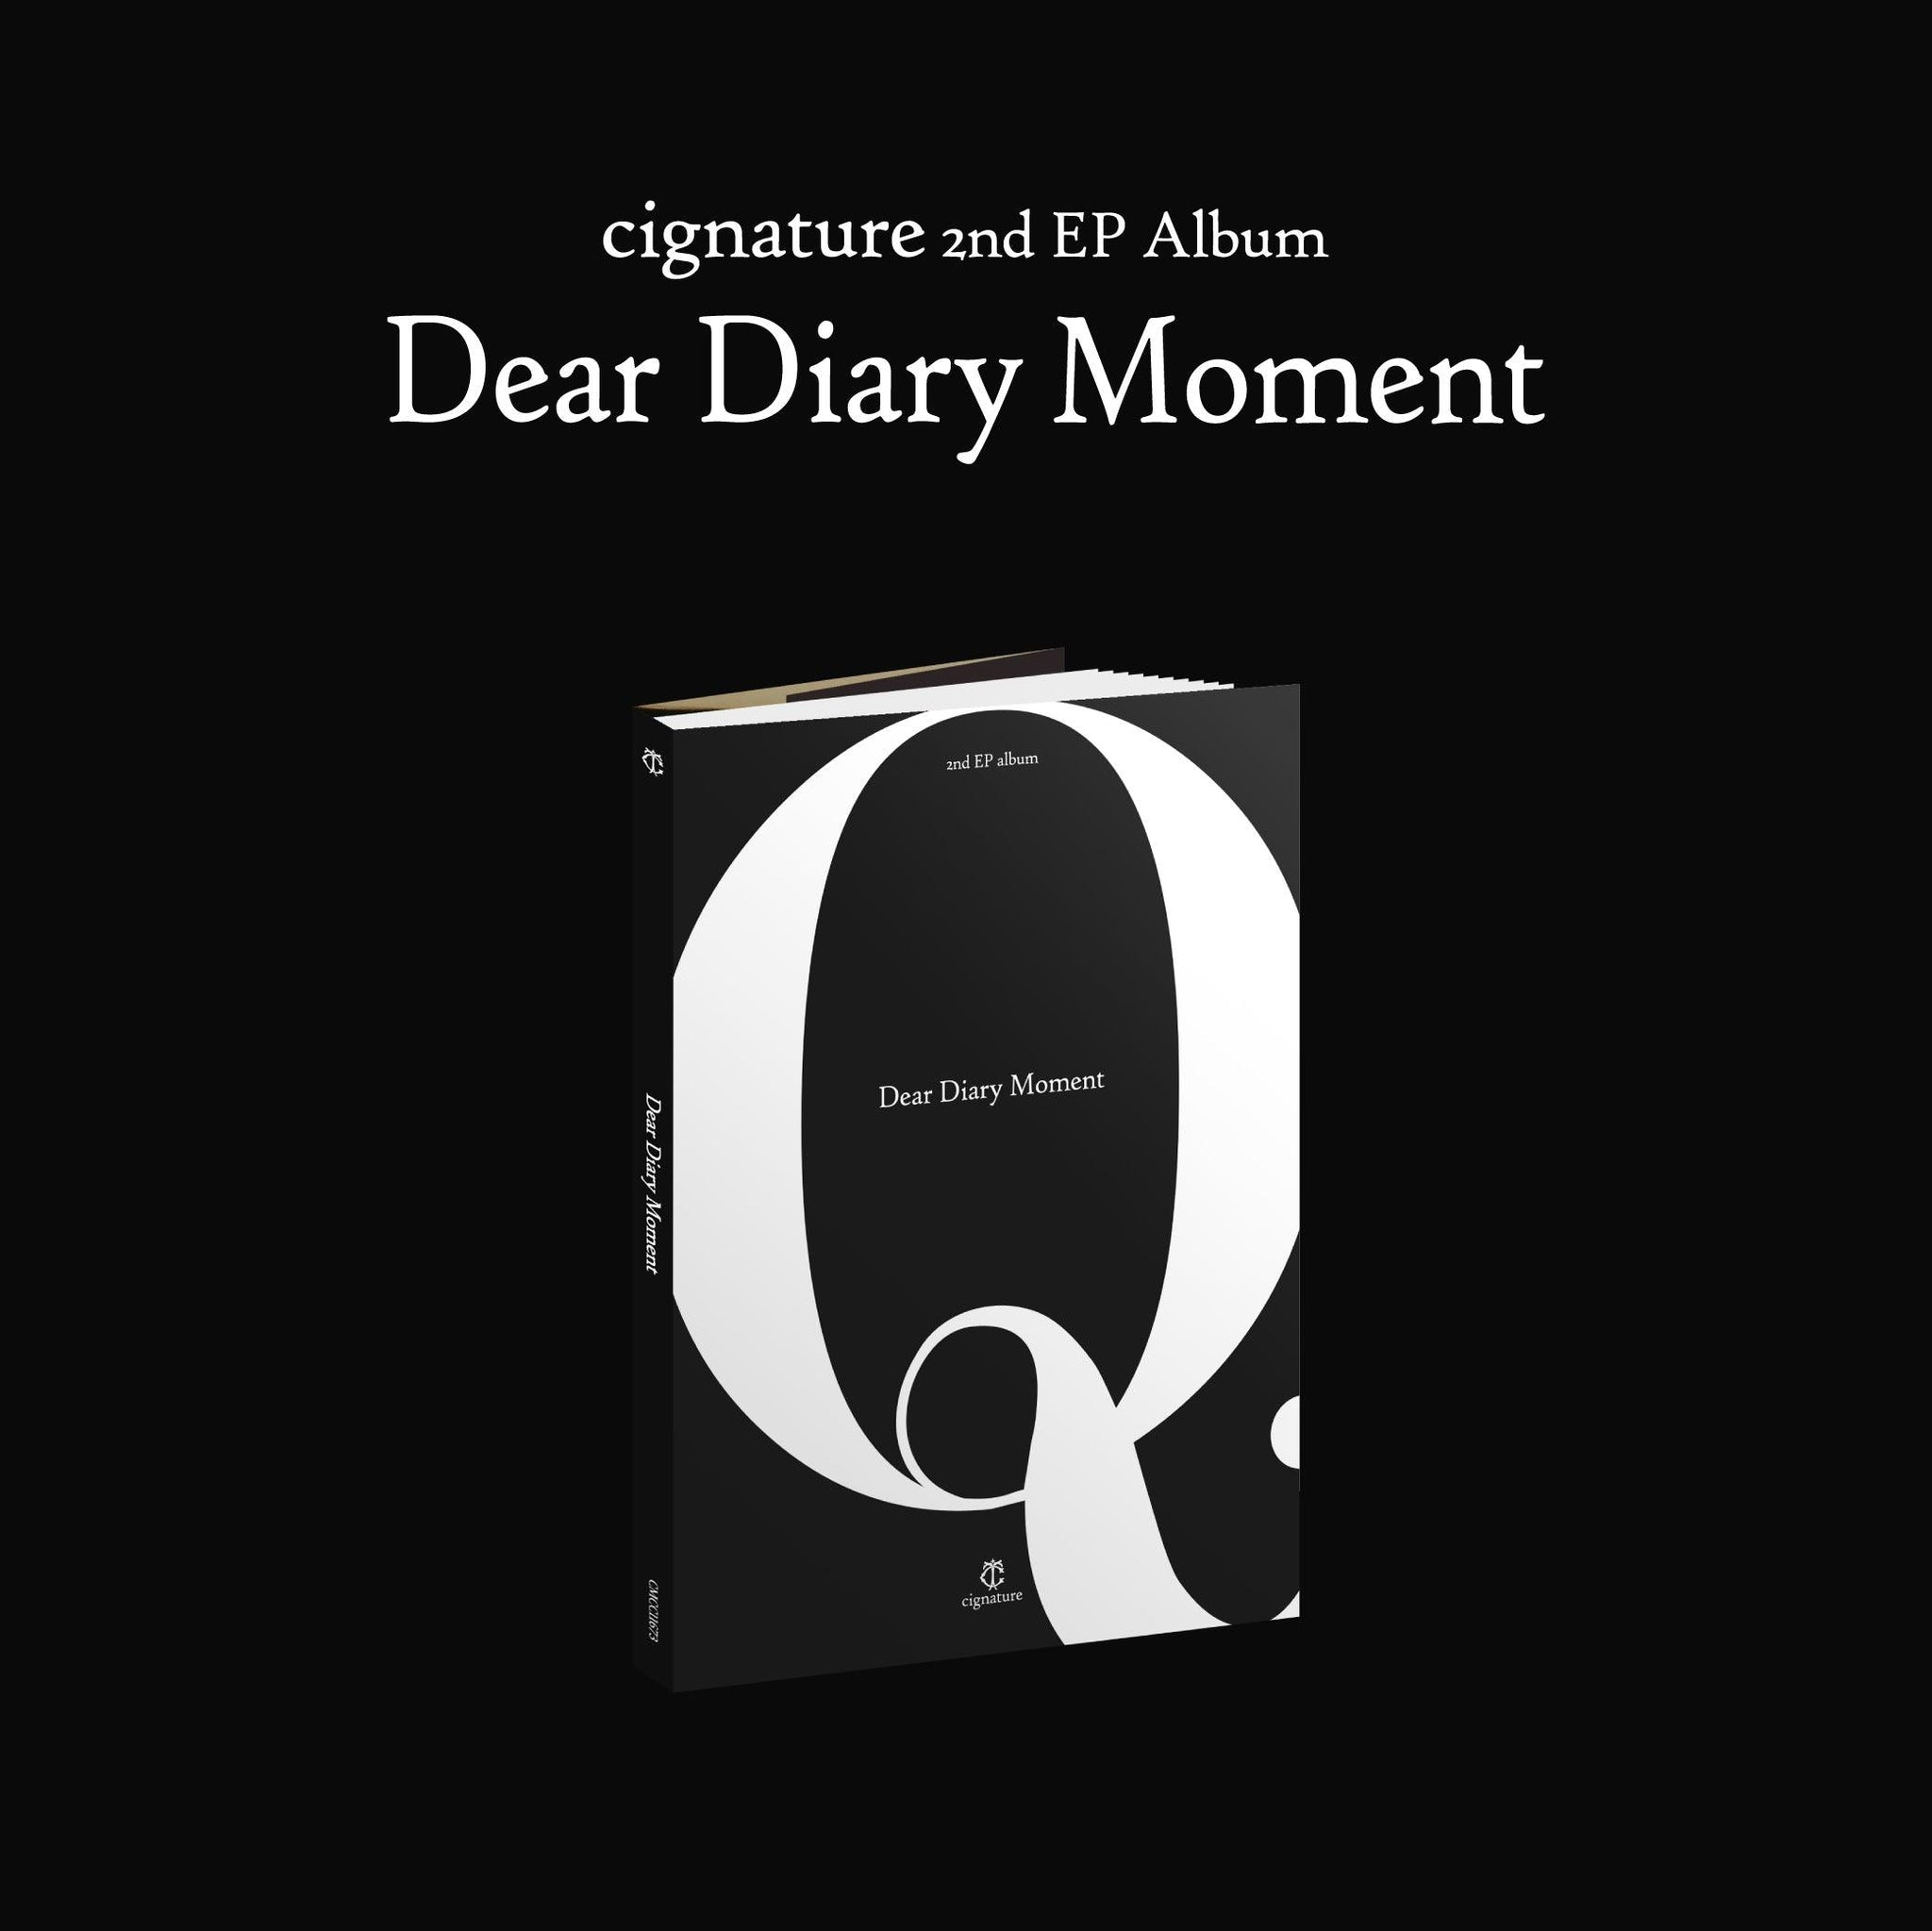 CIGNATURE 2ND EP ALBUM 'DEAR DIARY MOMENT' QUESTION COVER